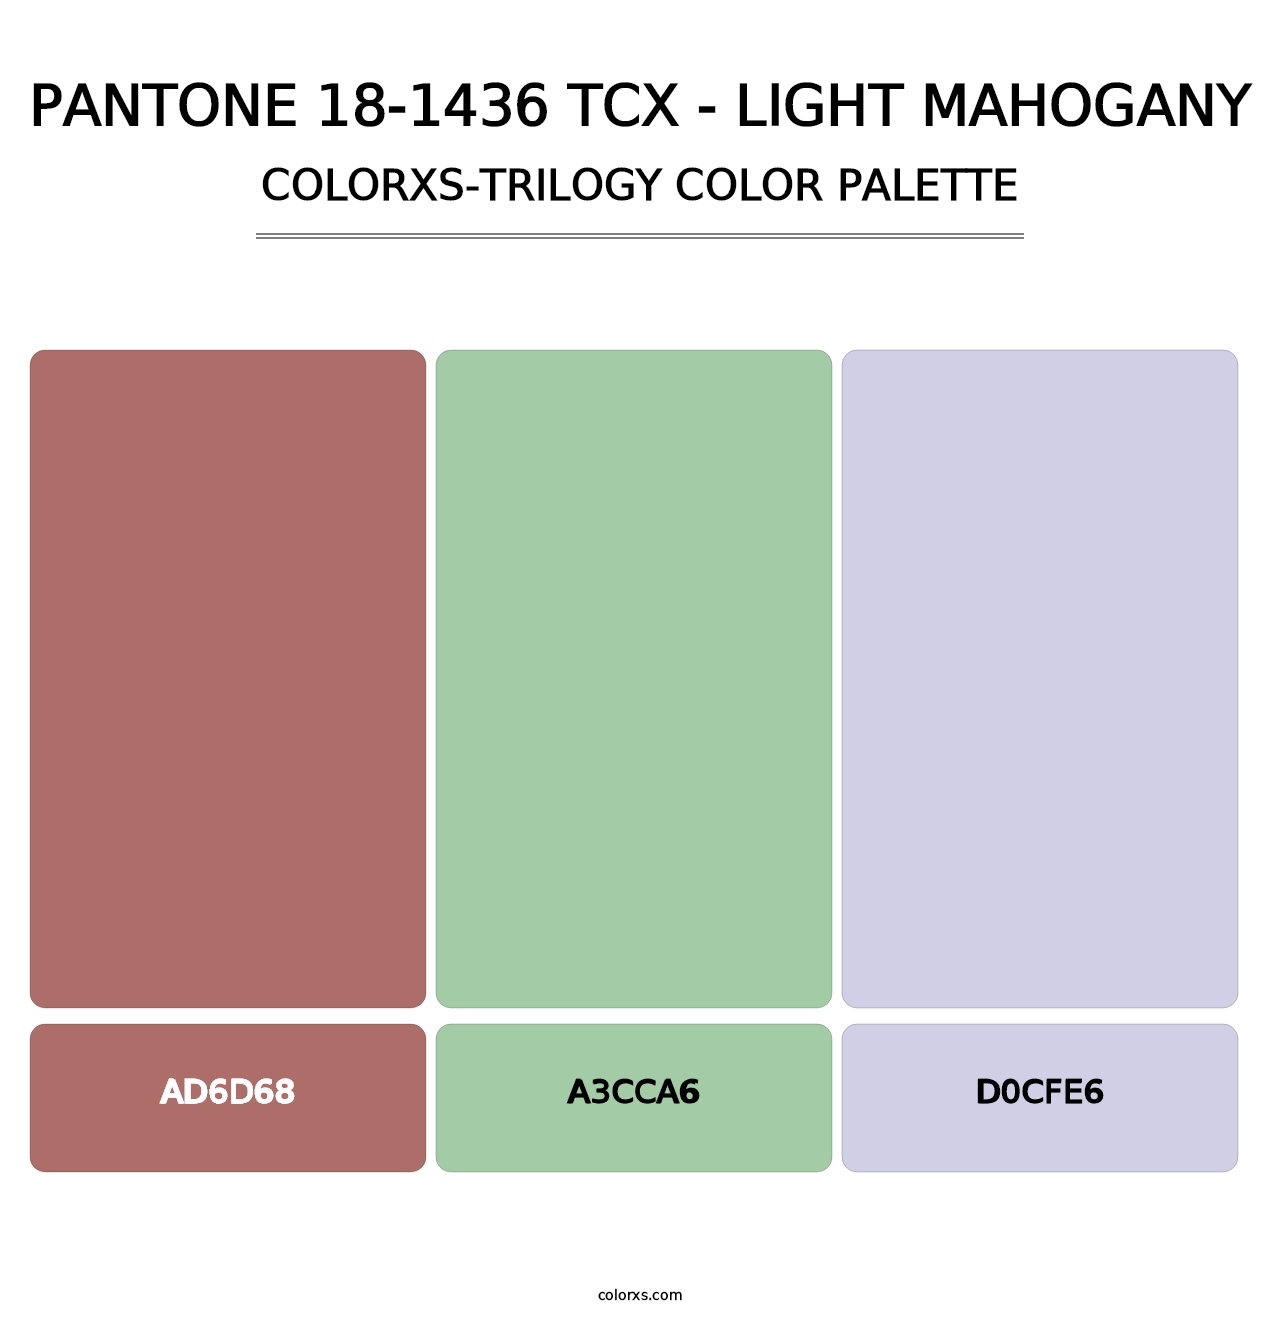 PANTONE 18-1436 TCX - Light Mahogany - Colorxs Trilogy Palette